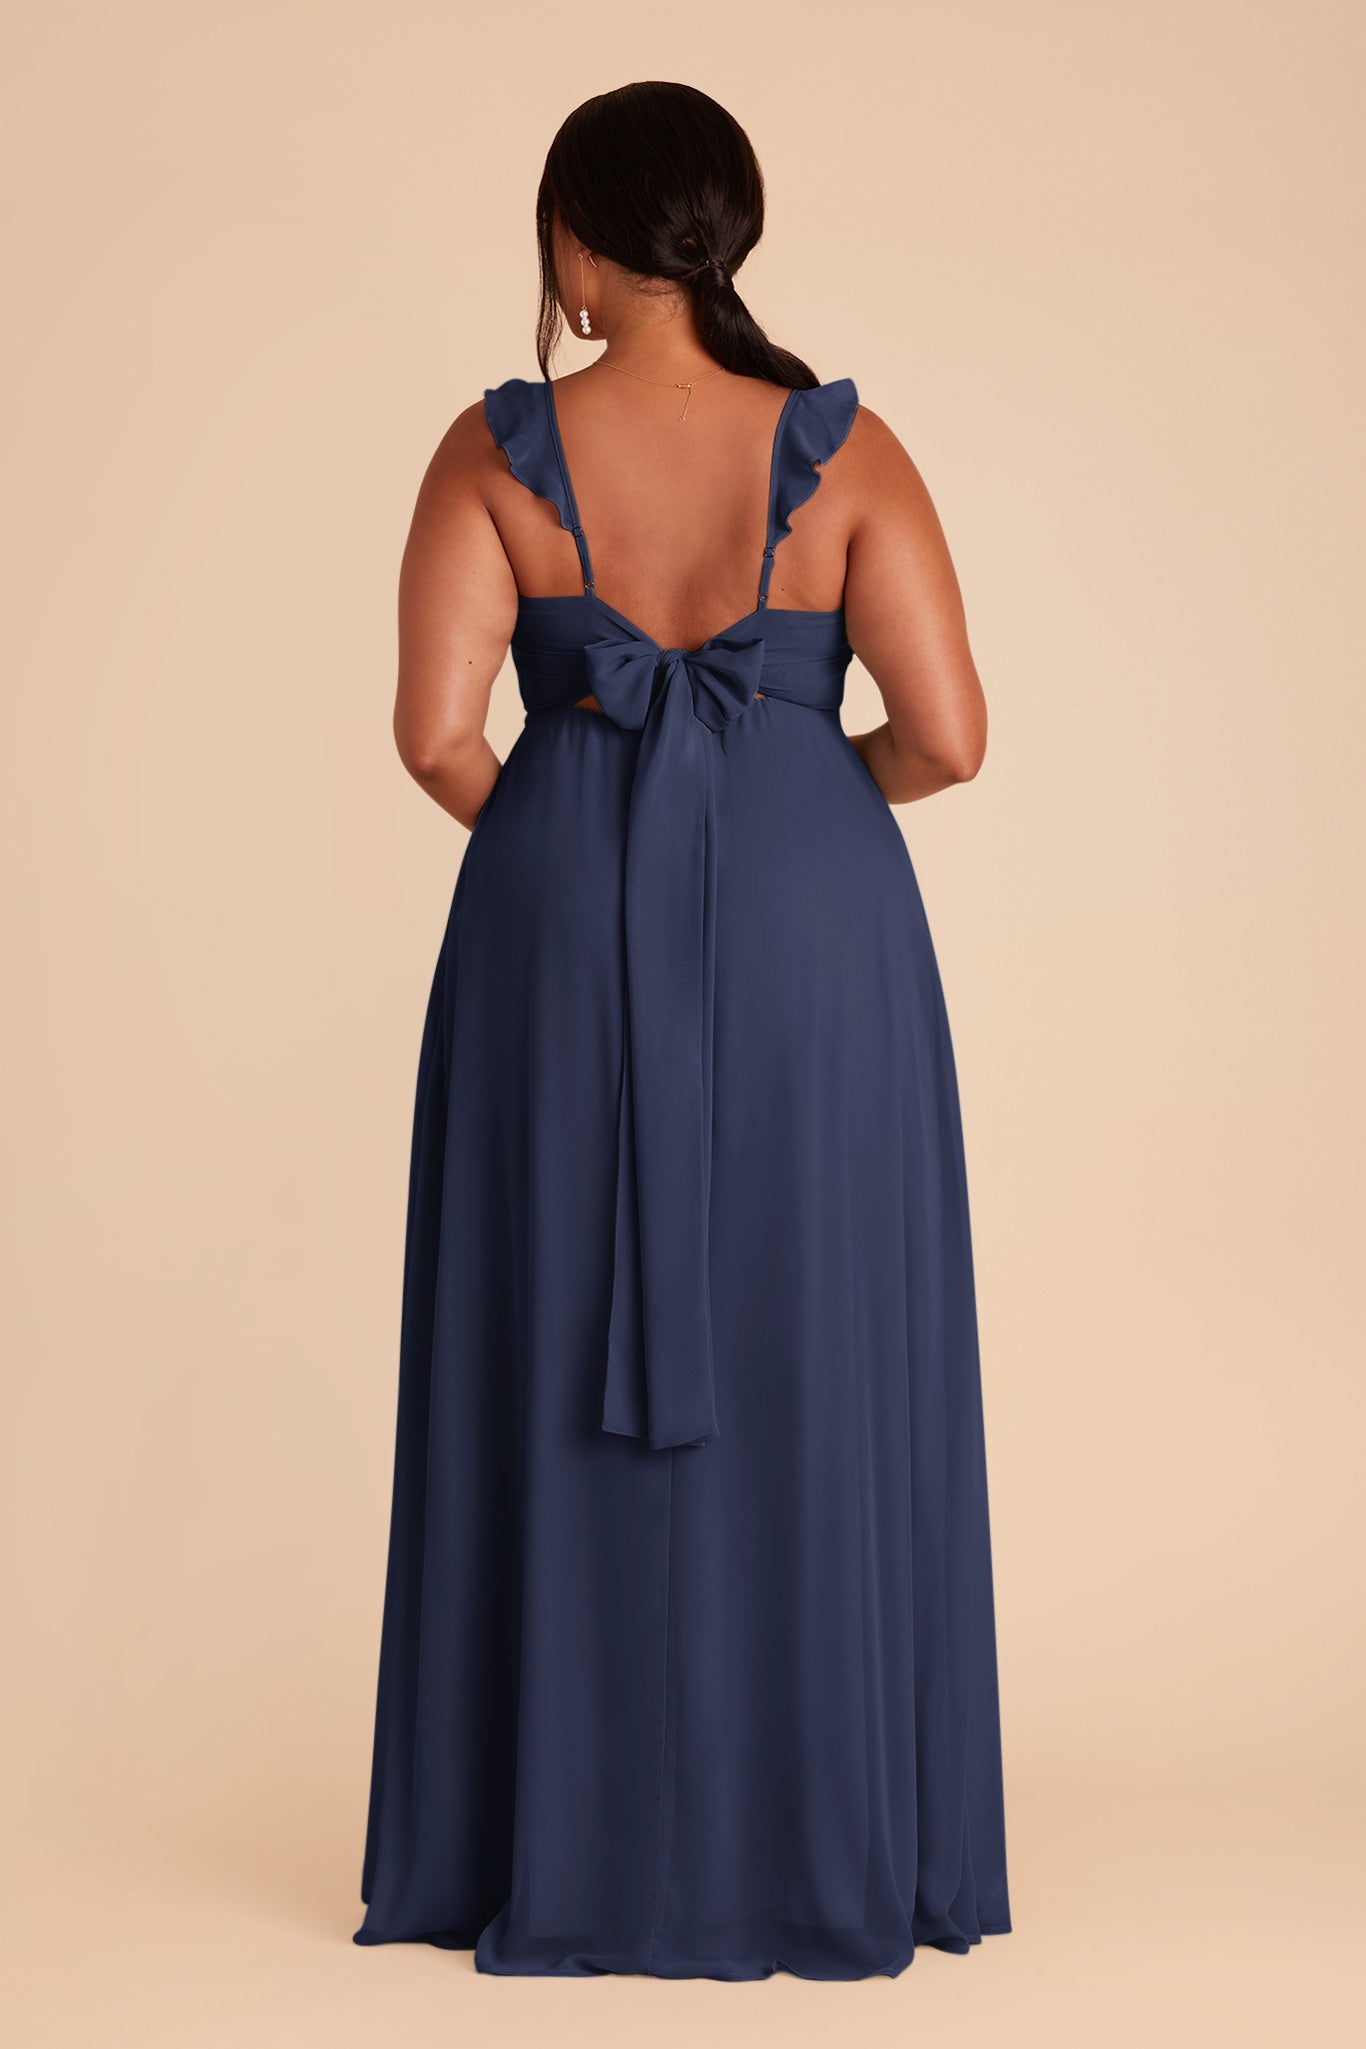 Slate Blue Doris Chiffon Dress by Birdy Grey